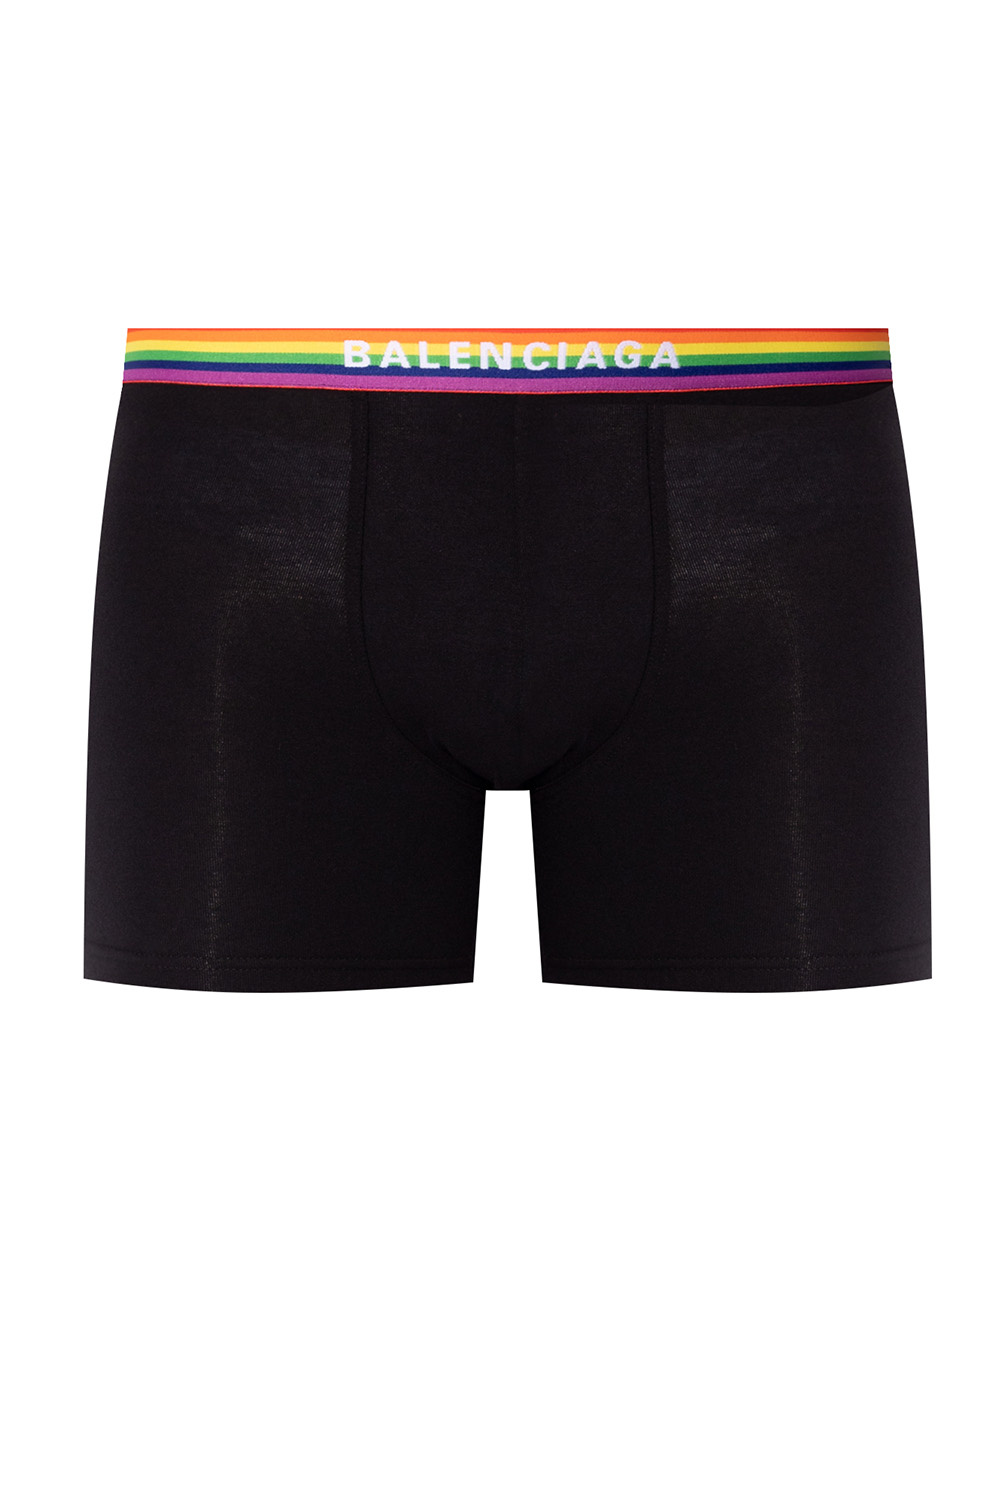 Black Boxers with logo Balenciaga - Vitkac Spain